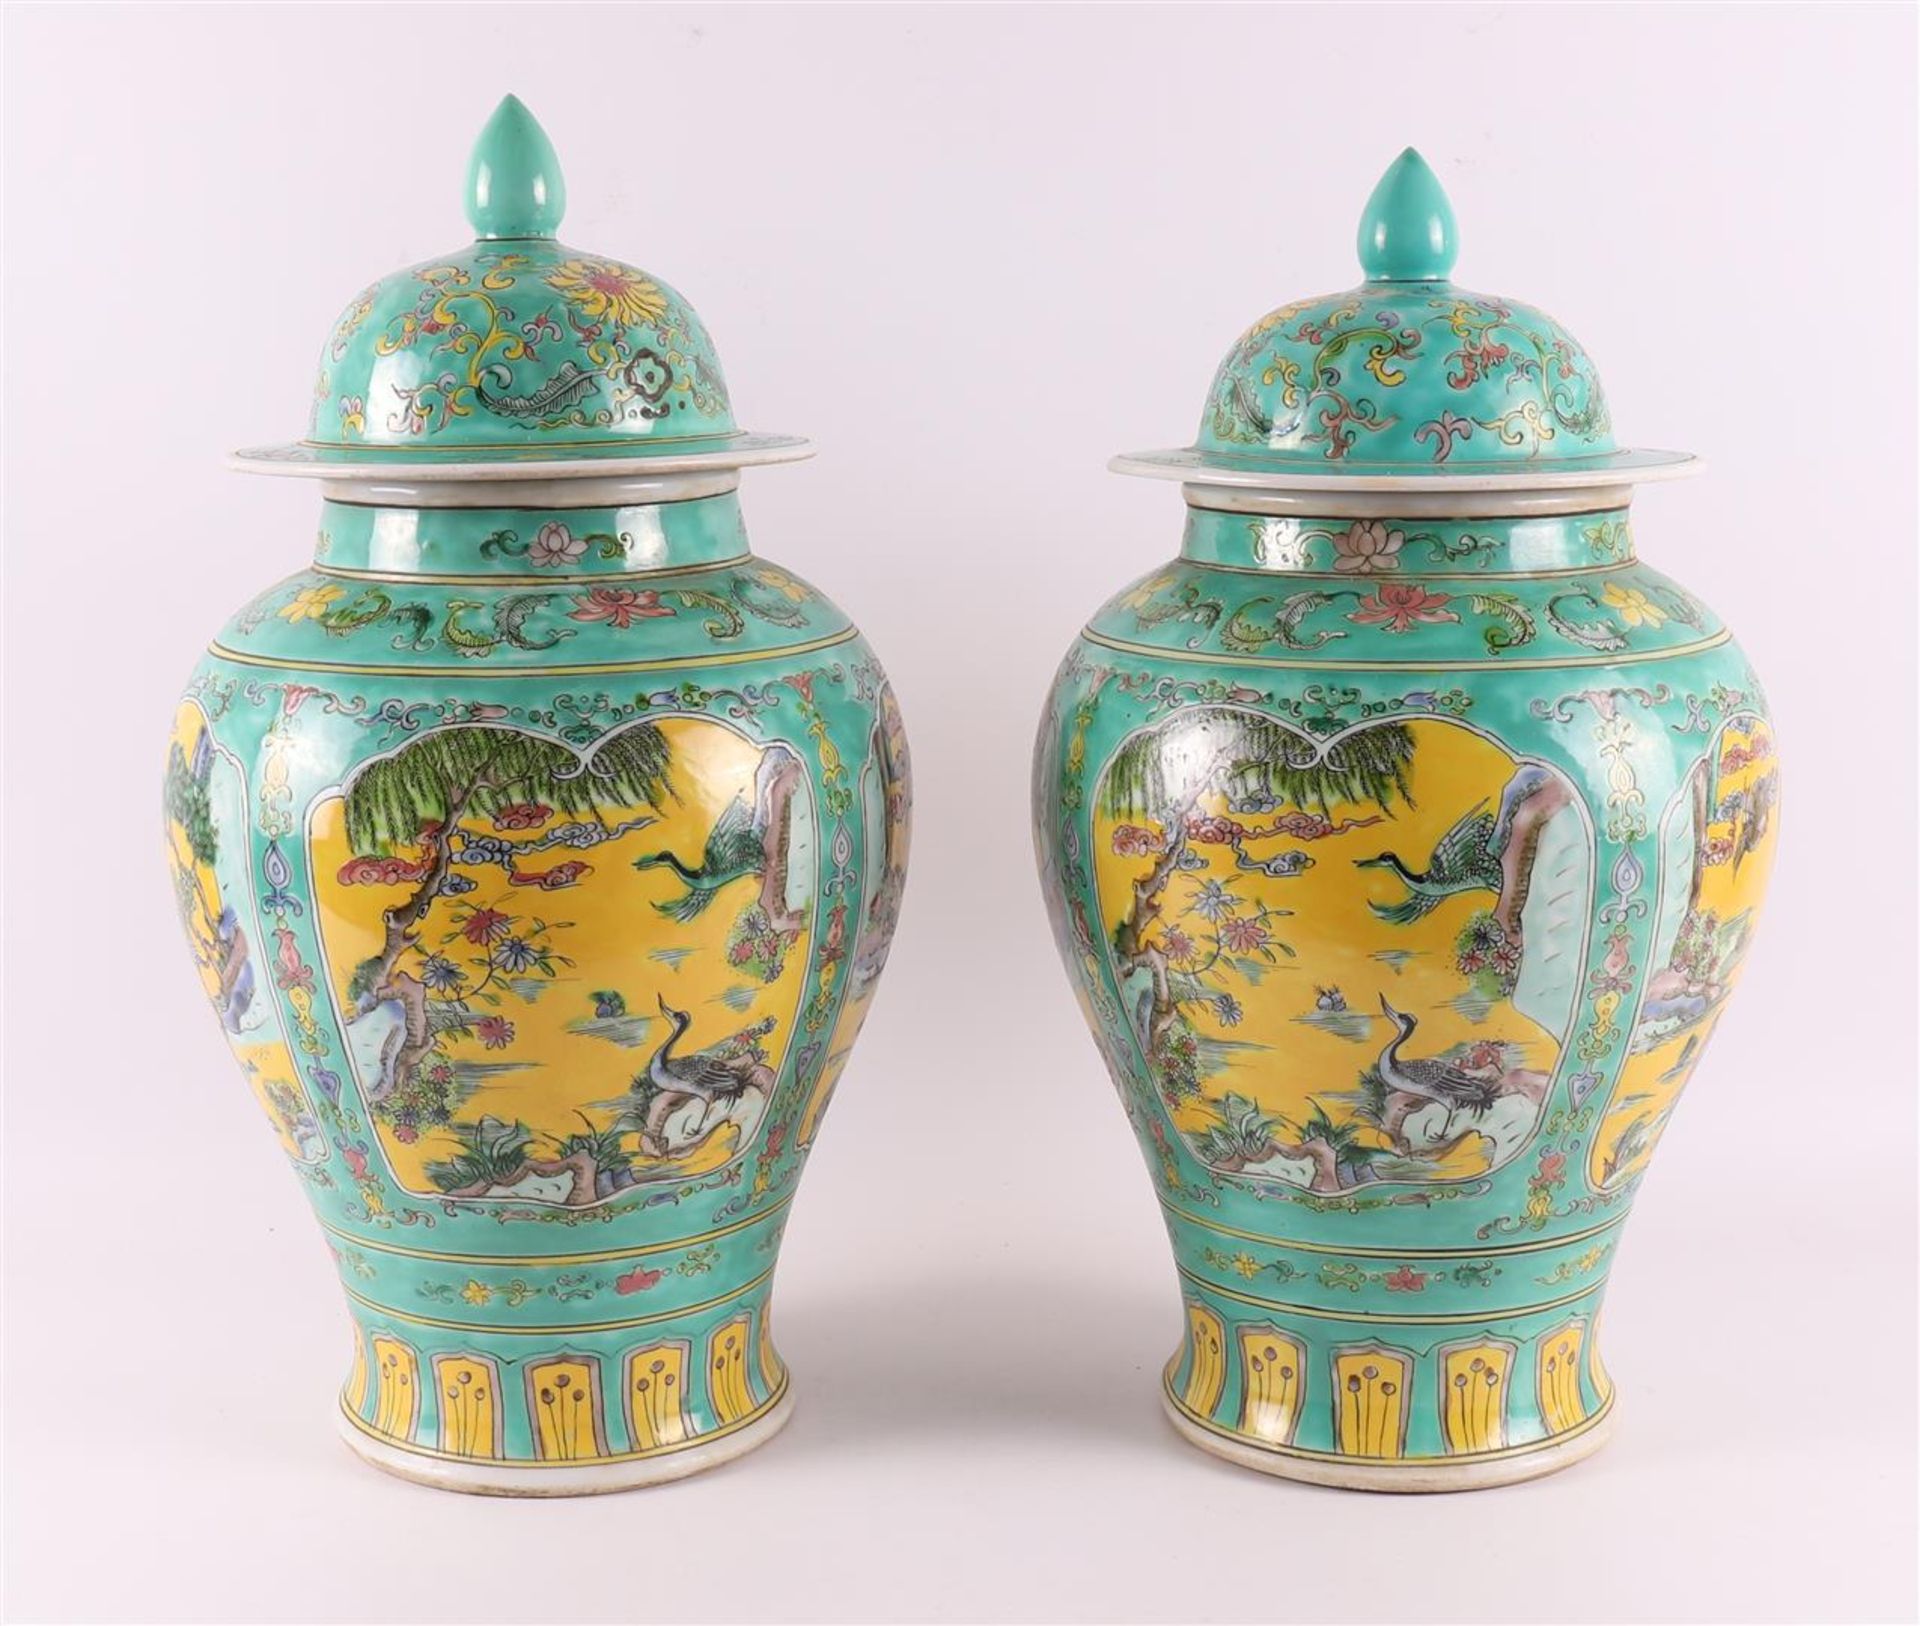 A pair of verte and jaune glazed lidded vases, China, around 1900.